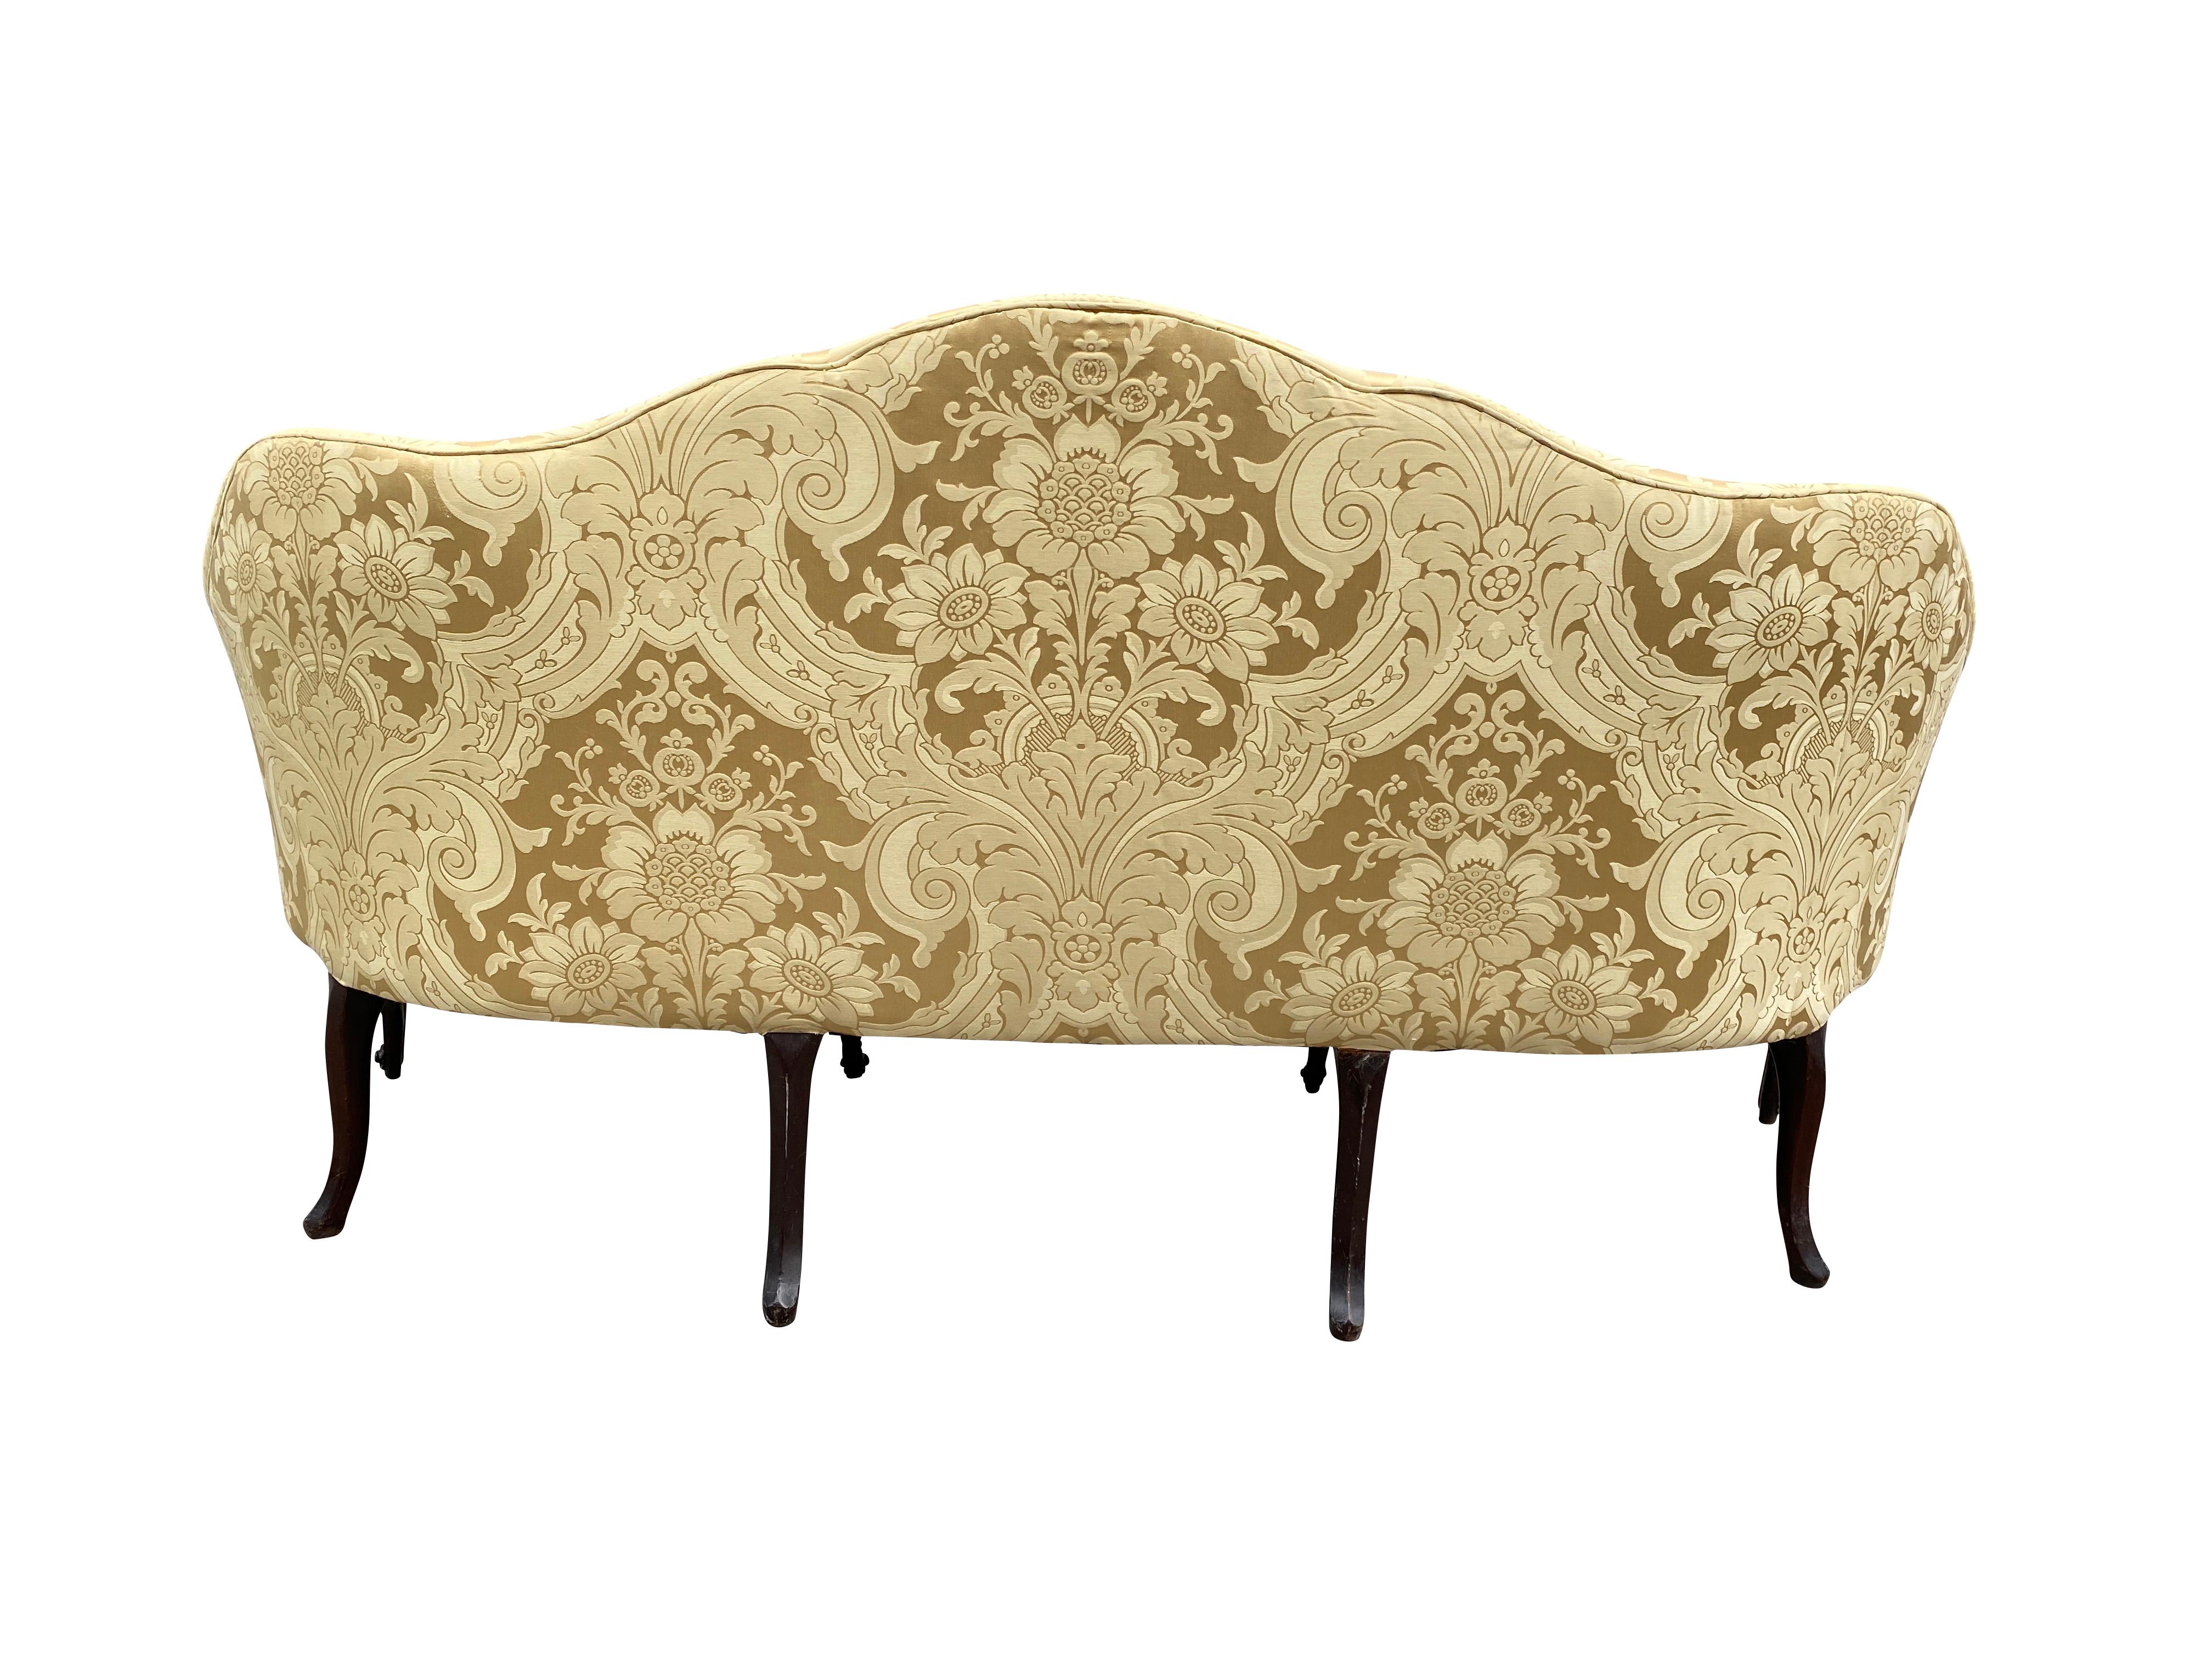 Late 18th Century George III Style Mahogany Sofa